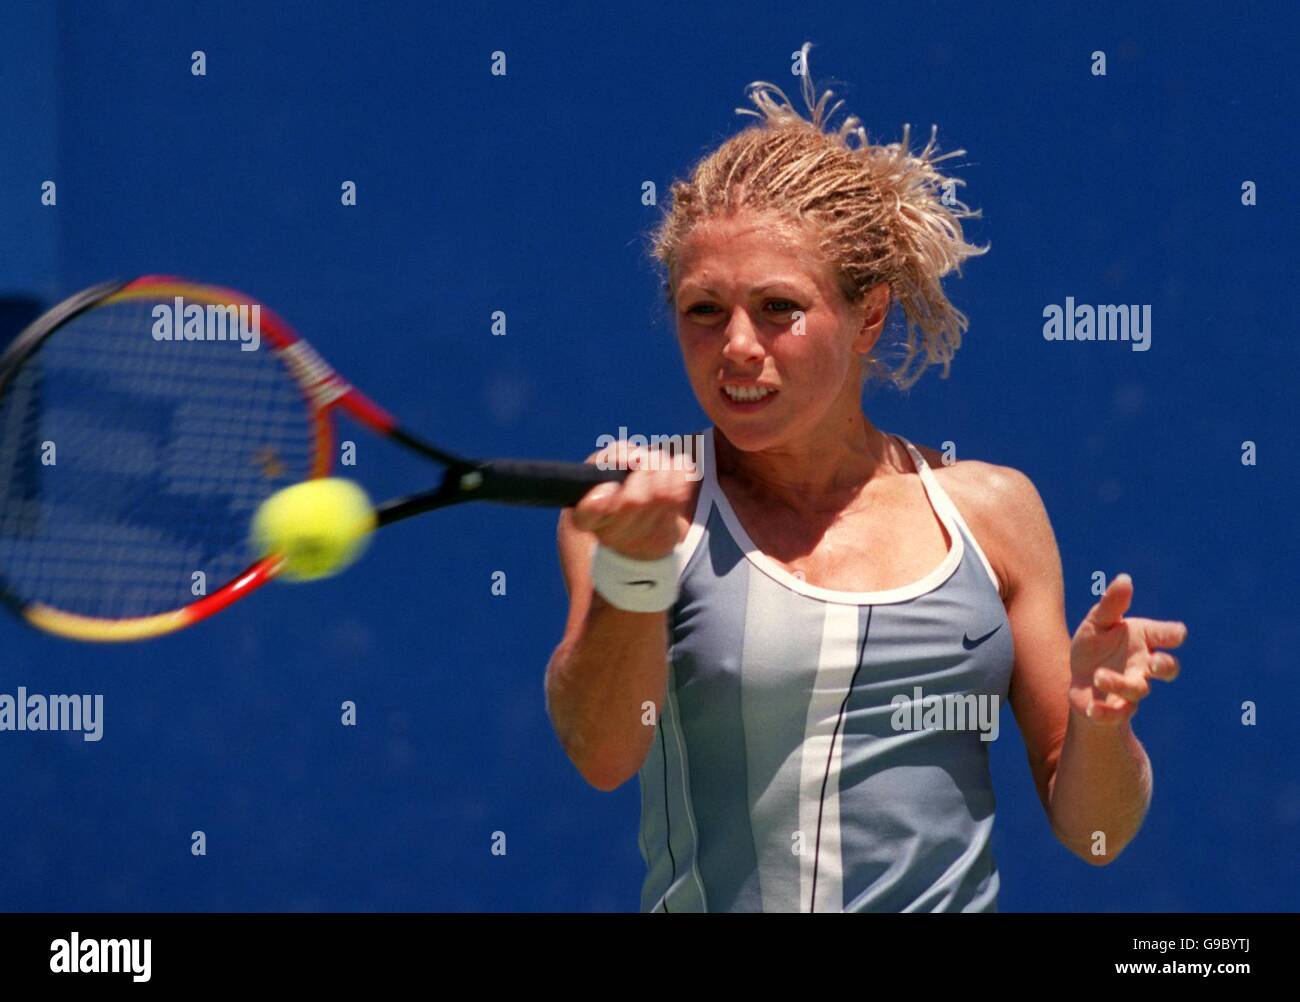 Tennis - Ford Australian Open - Melbourne Park - Women's Singles - Second Round - Kristina Brandi v Amanda Coetzer. Amanda Coetzer in action Stock Photo